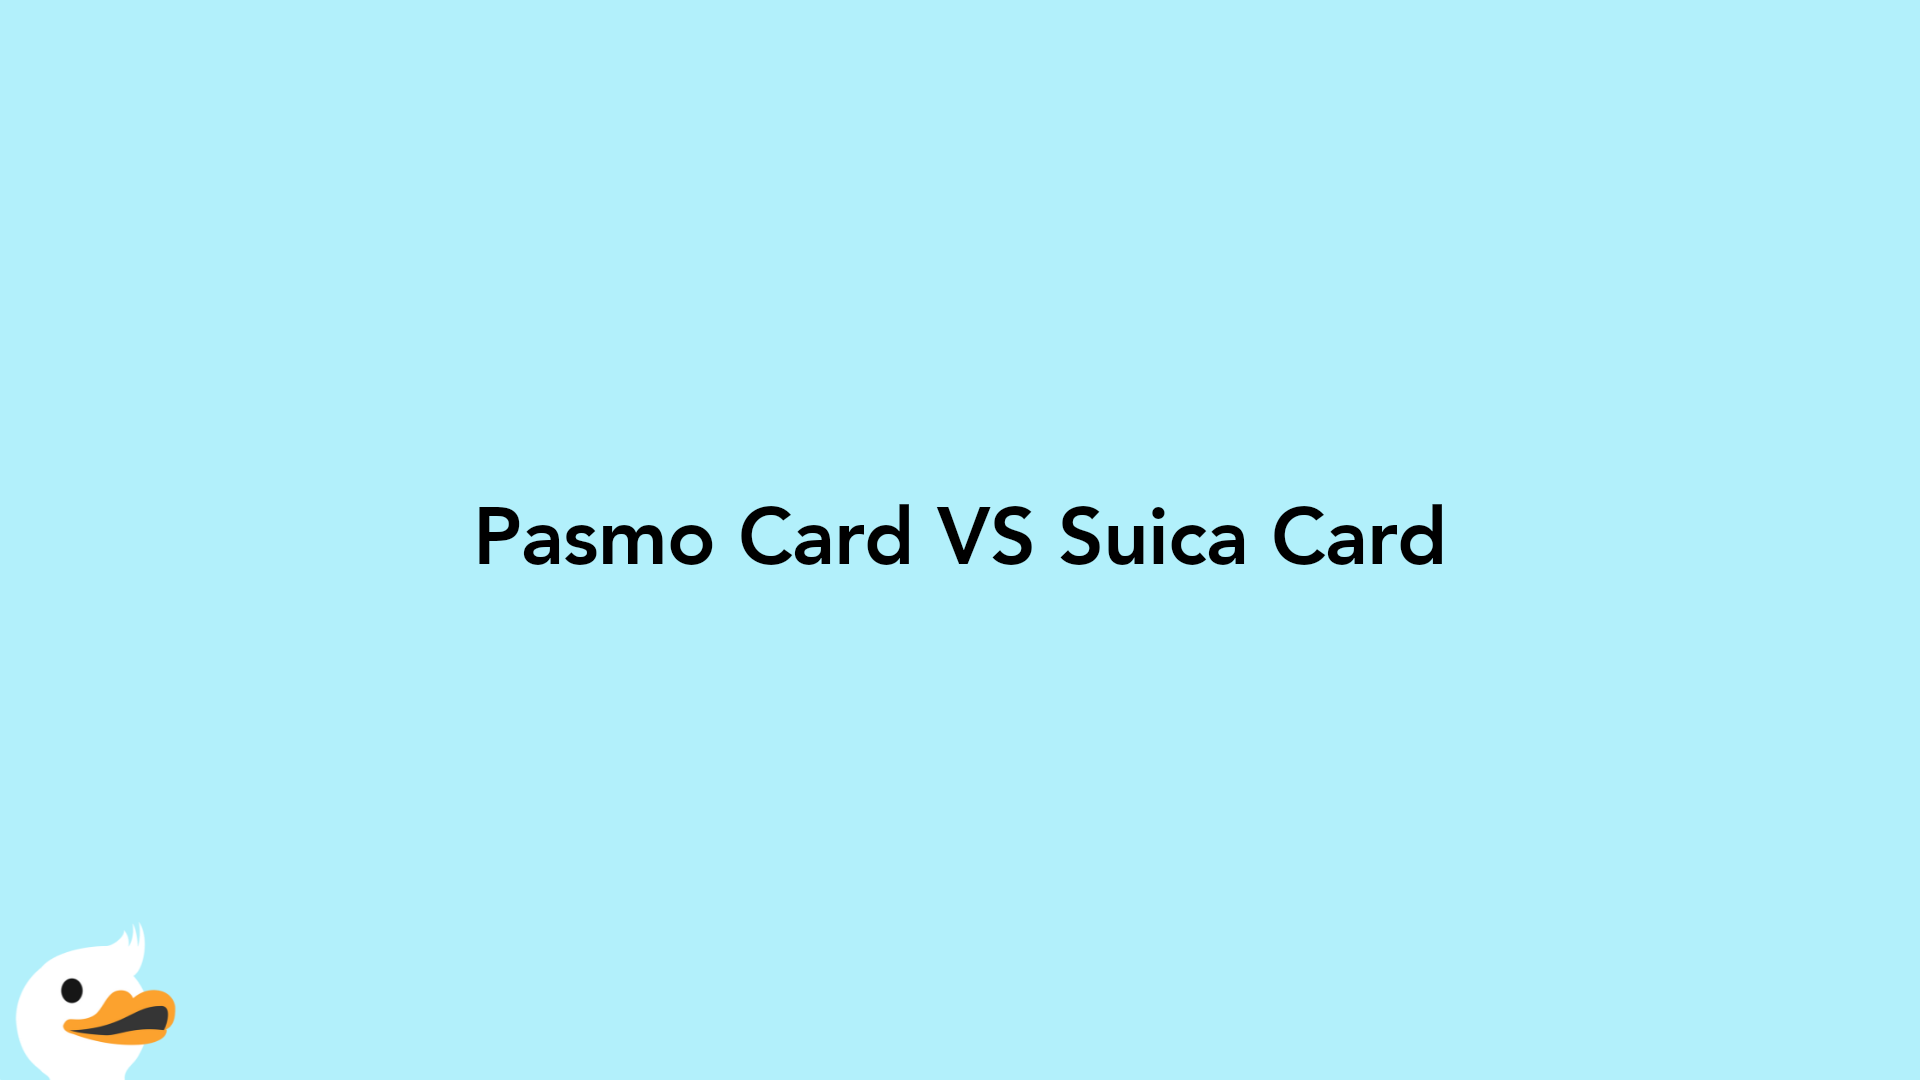 Pasmo Card VS Suica Card